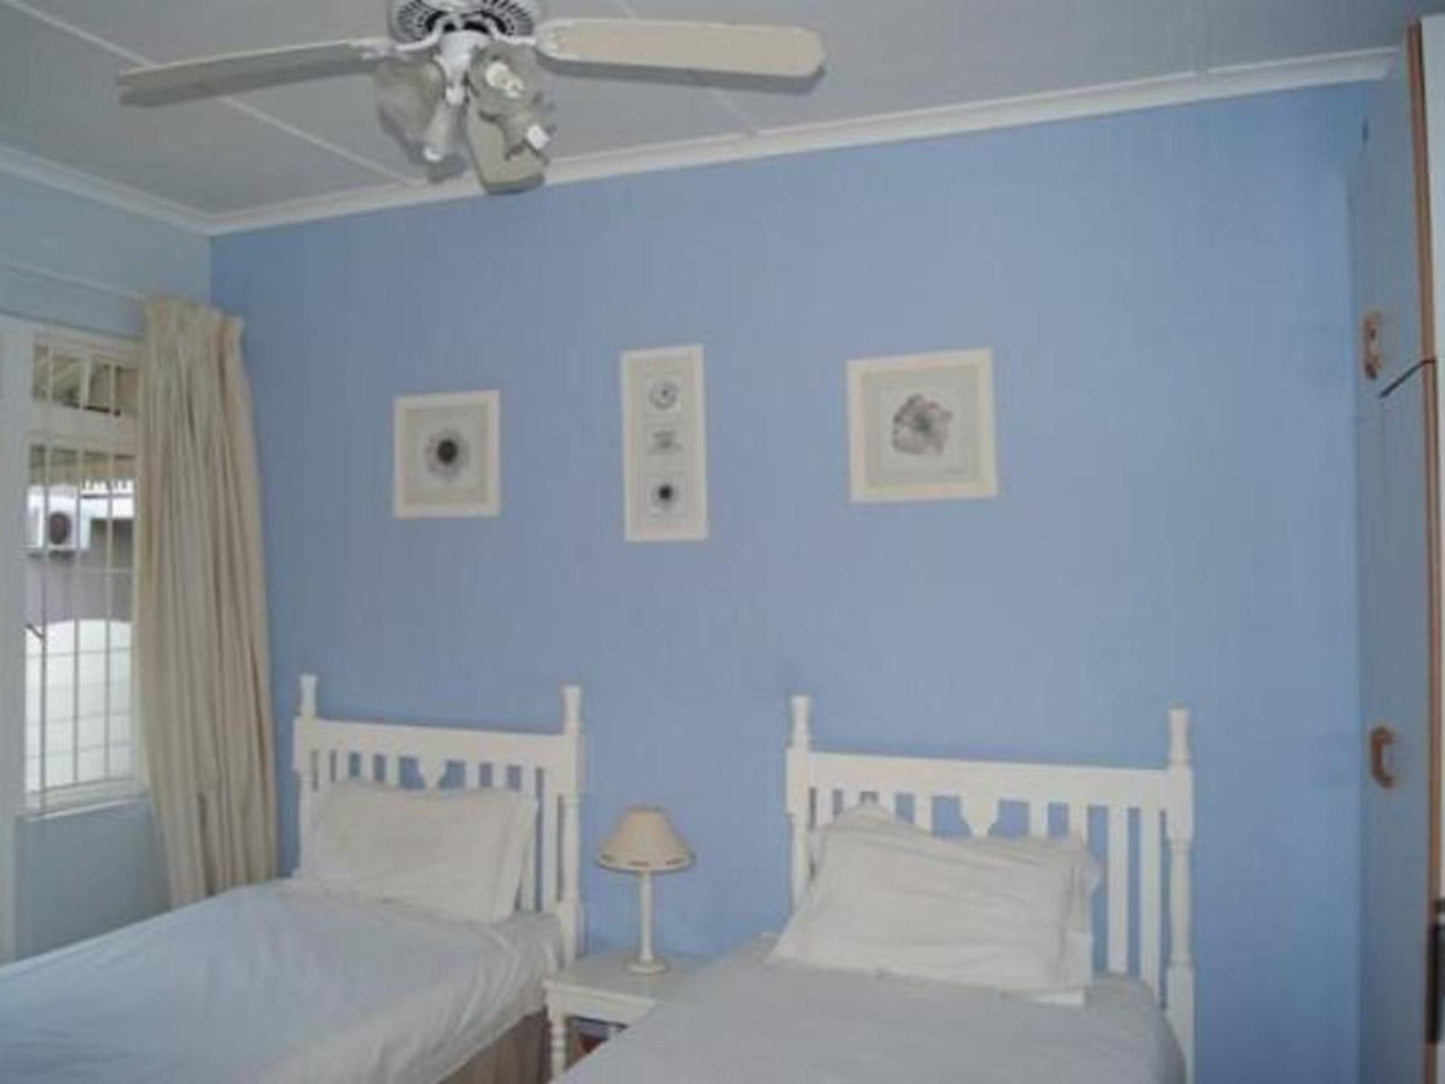 Sommersby Guest House Morningside Durban Kwazulu Natal South Africa Bedroom